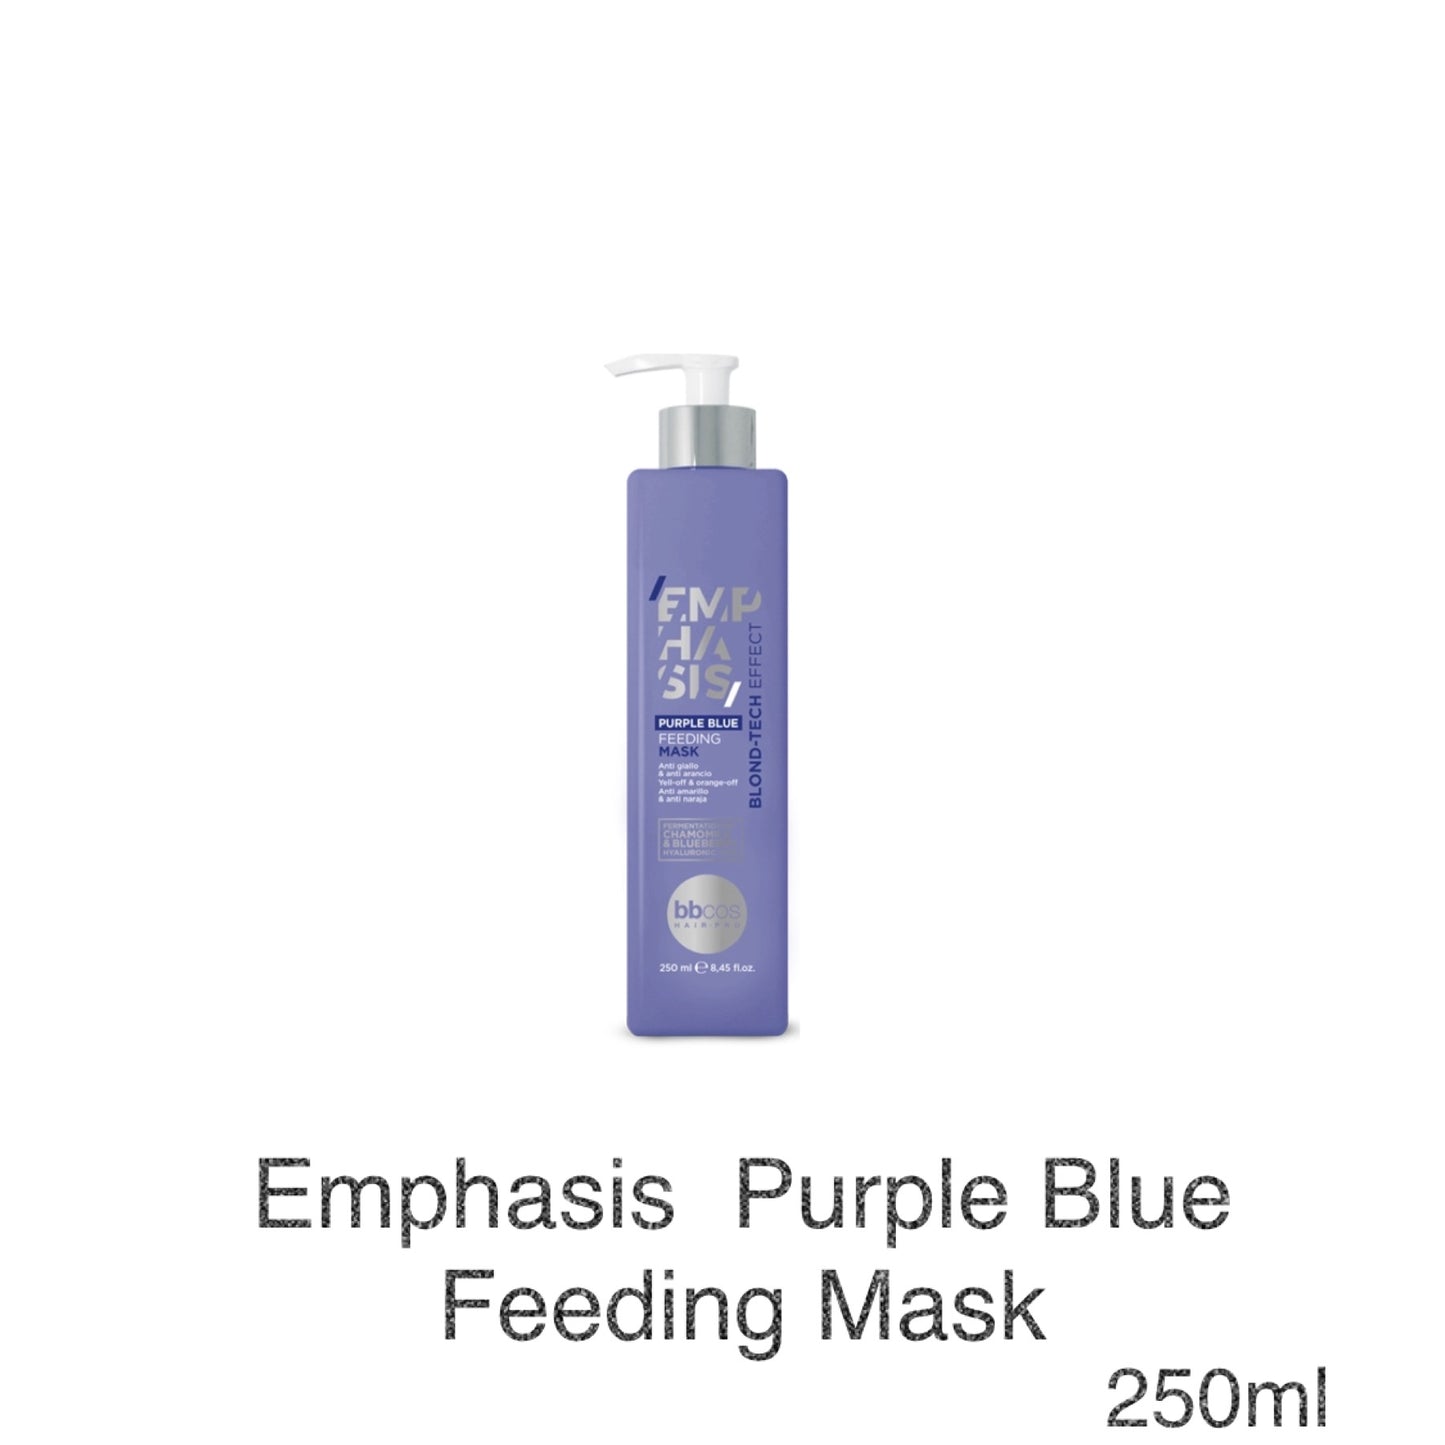 MHP- Italian Emphasis Purple Blue Feeding Mask